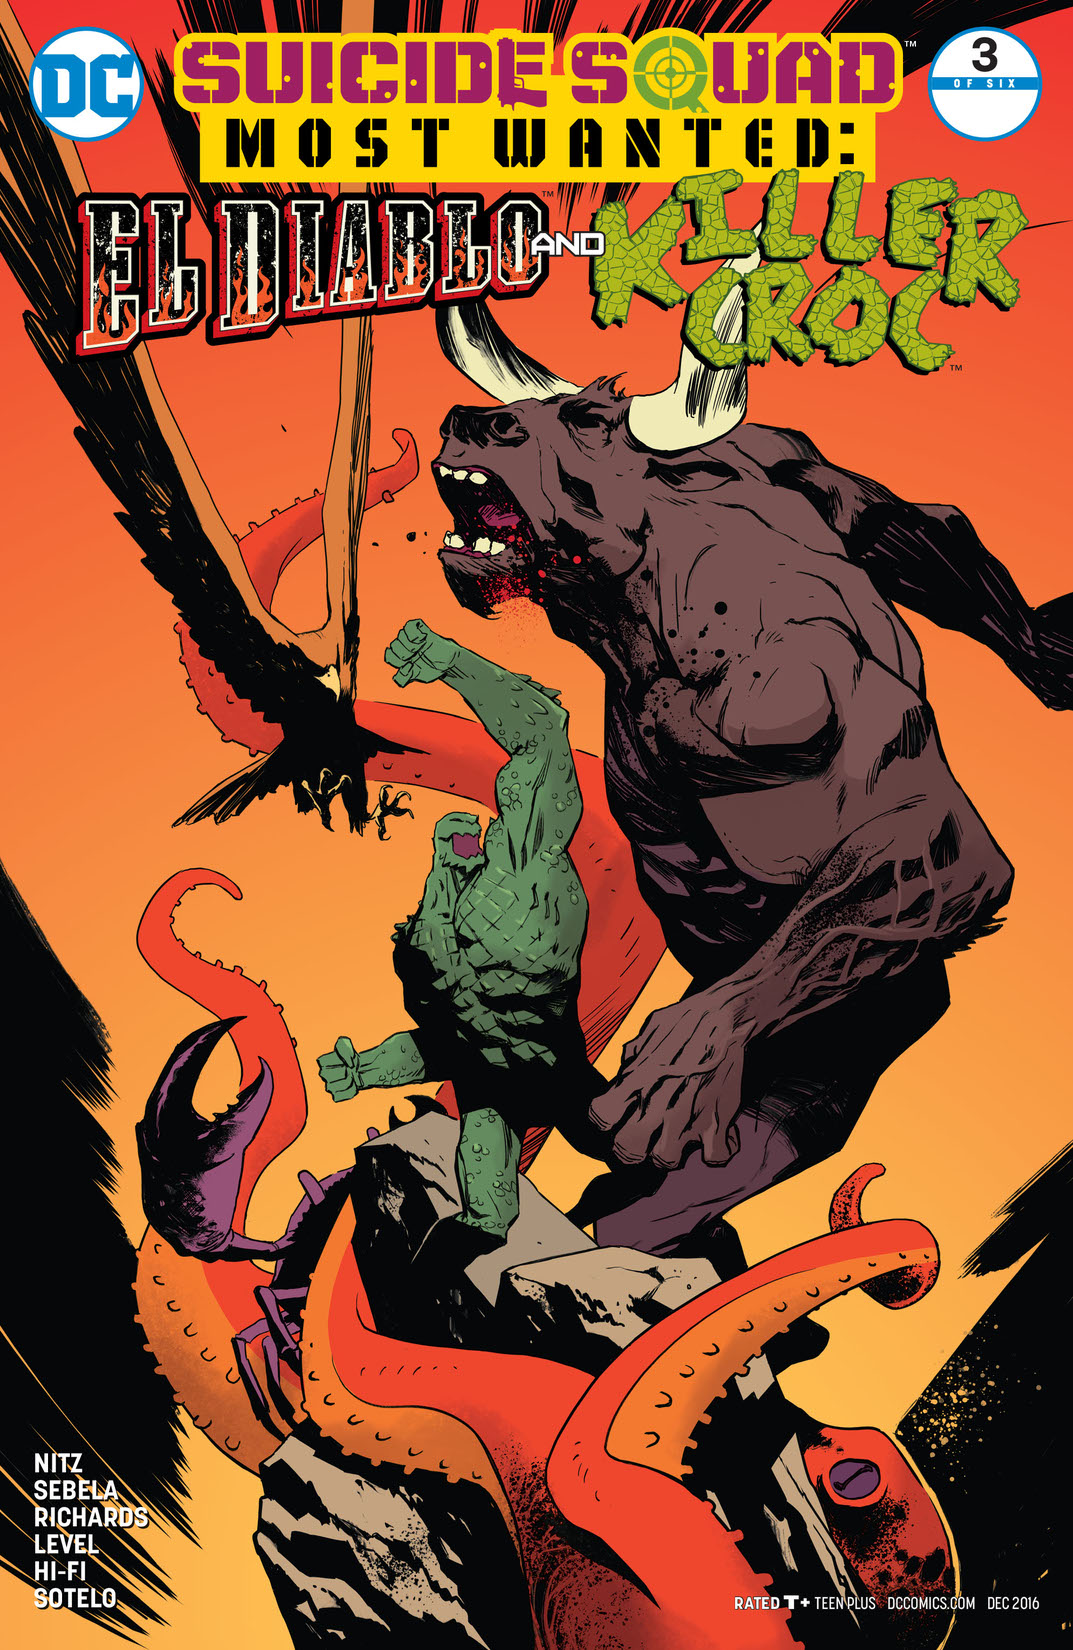 Suicide Squad Most Wanted: El Diablo and Killer Croc #3 preview images